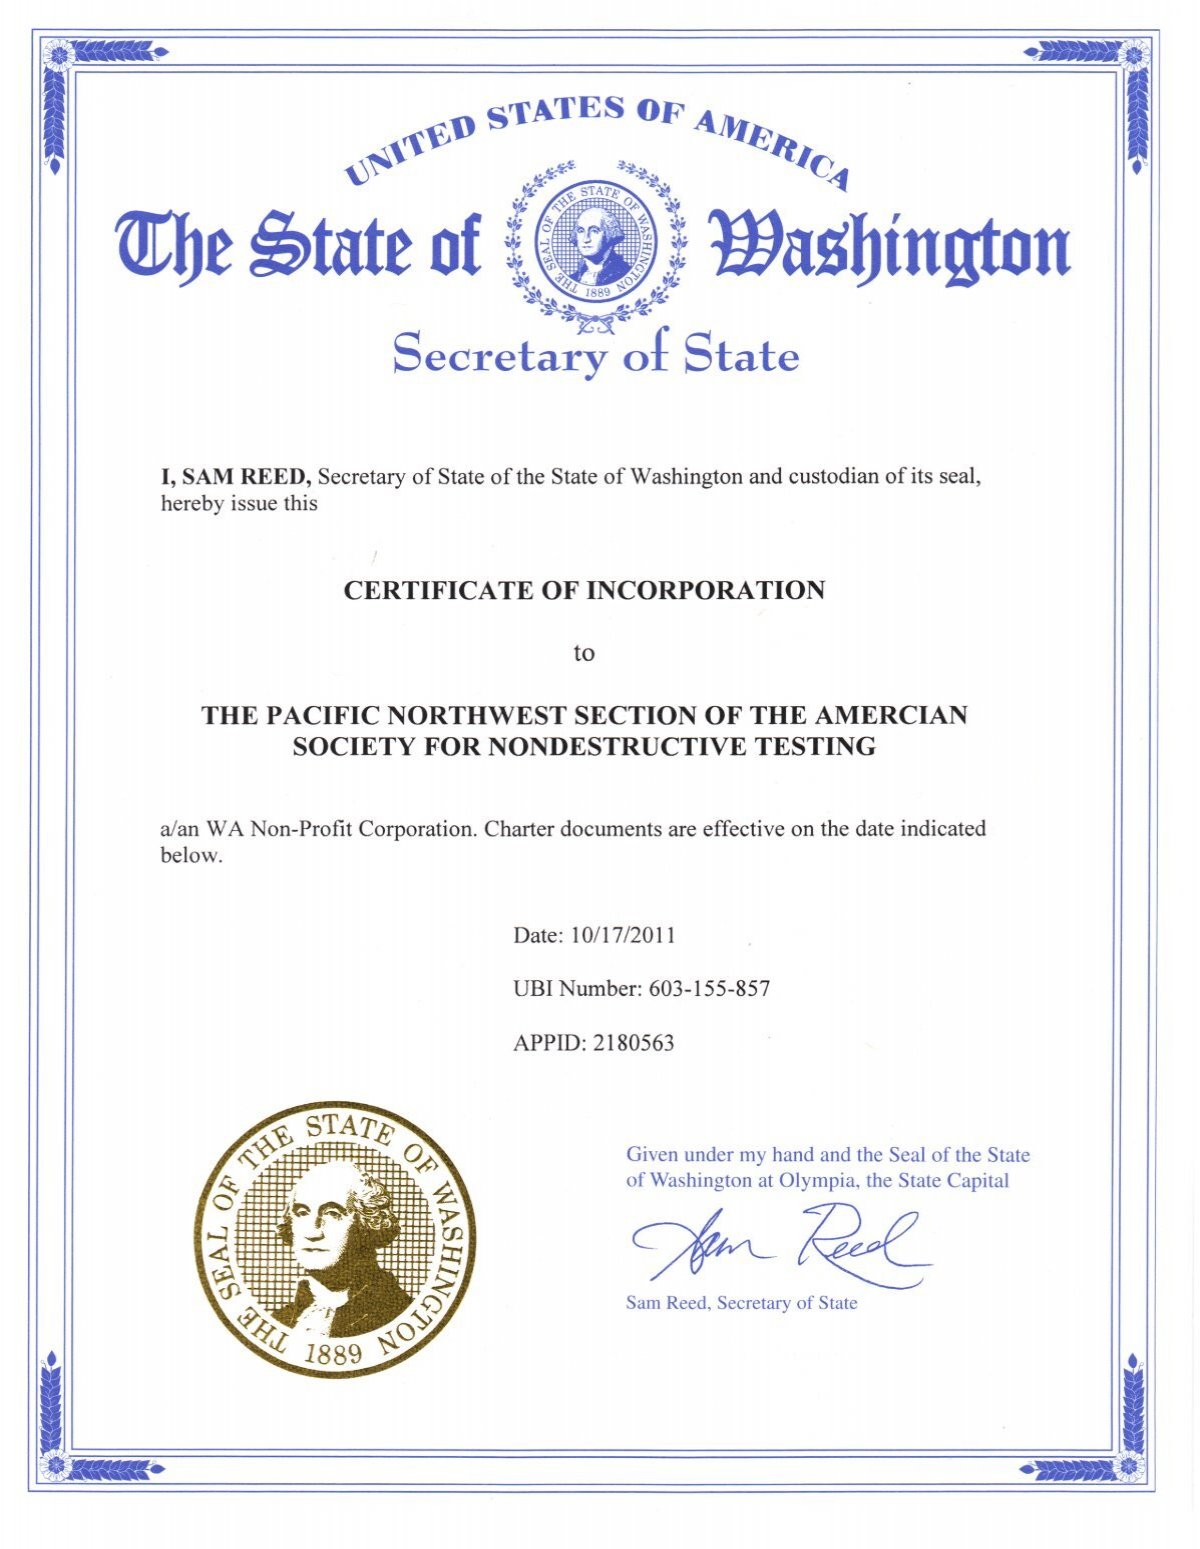 Asnt Certificate Holders prntbl concejomunicipaldechinu gov co